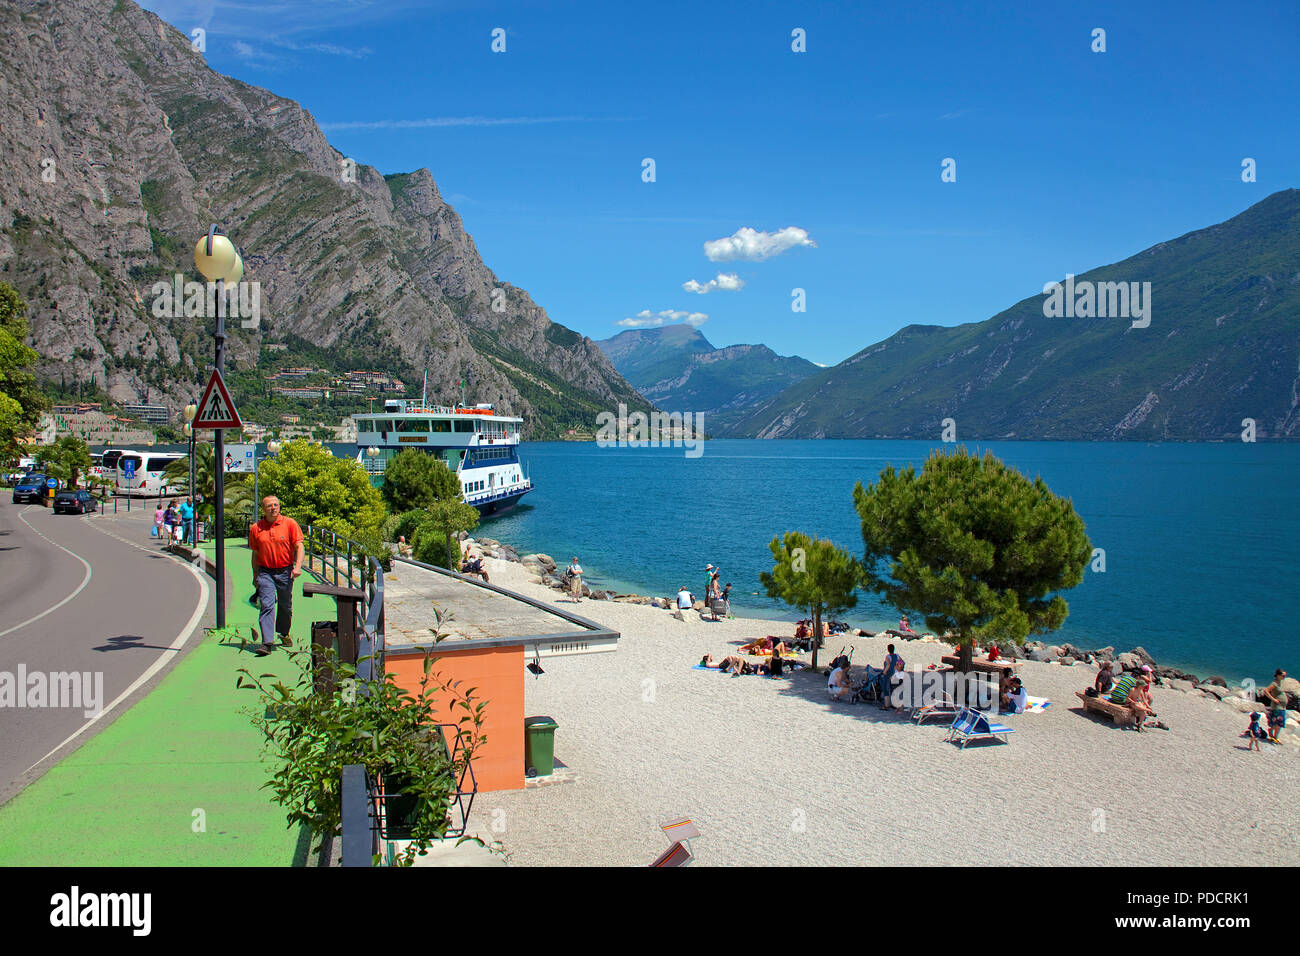 People at the beach of Limone, Limone sul Garda, Garda lake, Lombardy, Italy Stock Photo